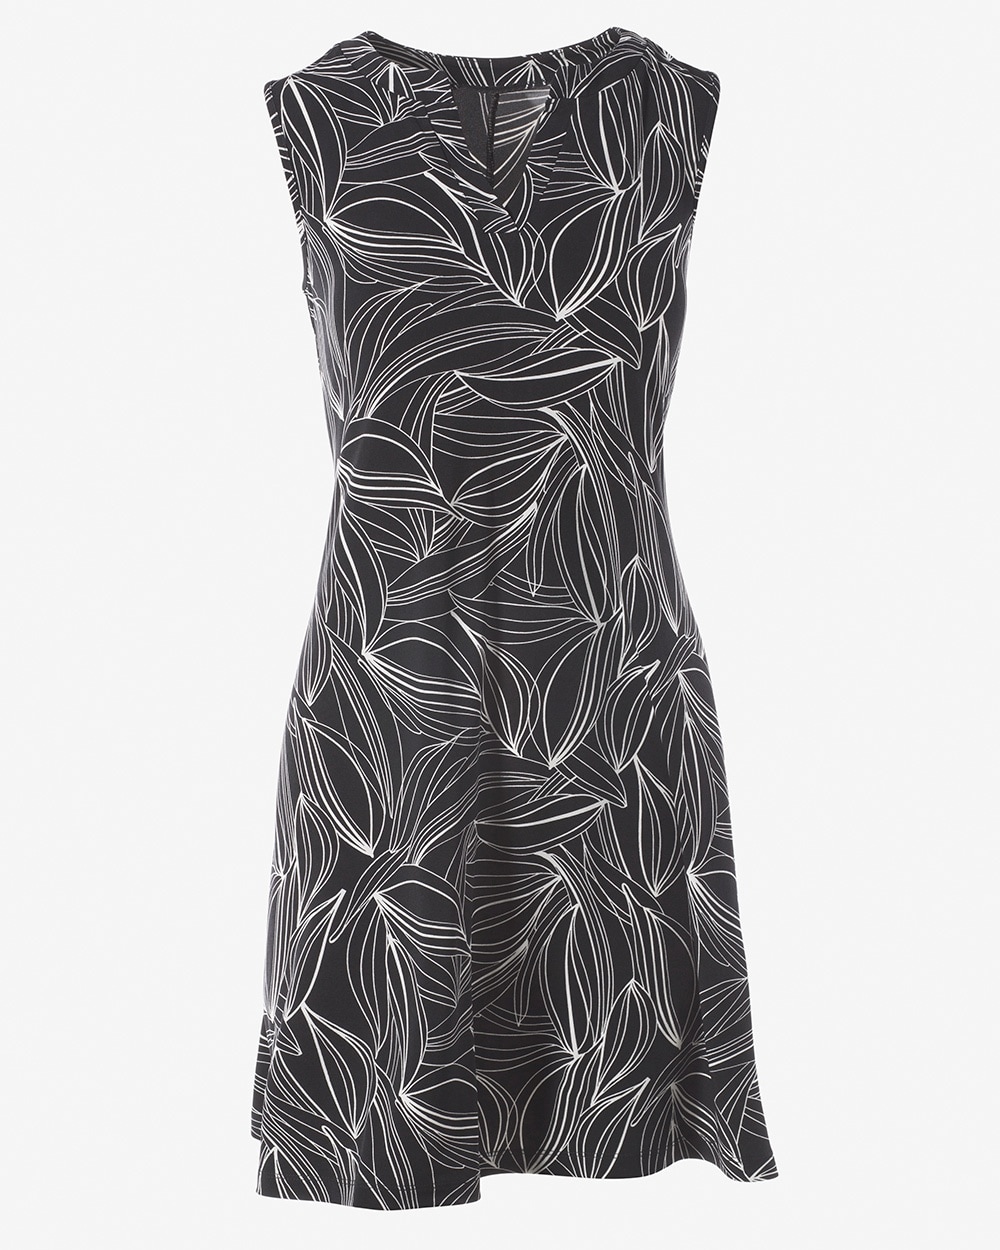 Leafy Lines Knee-Length Dress